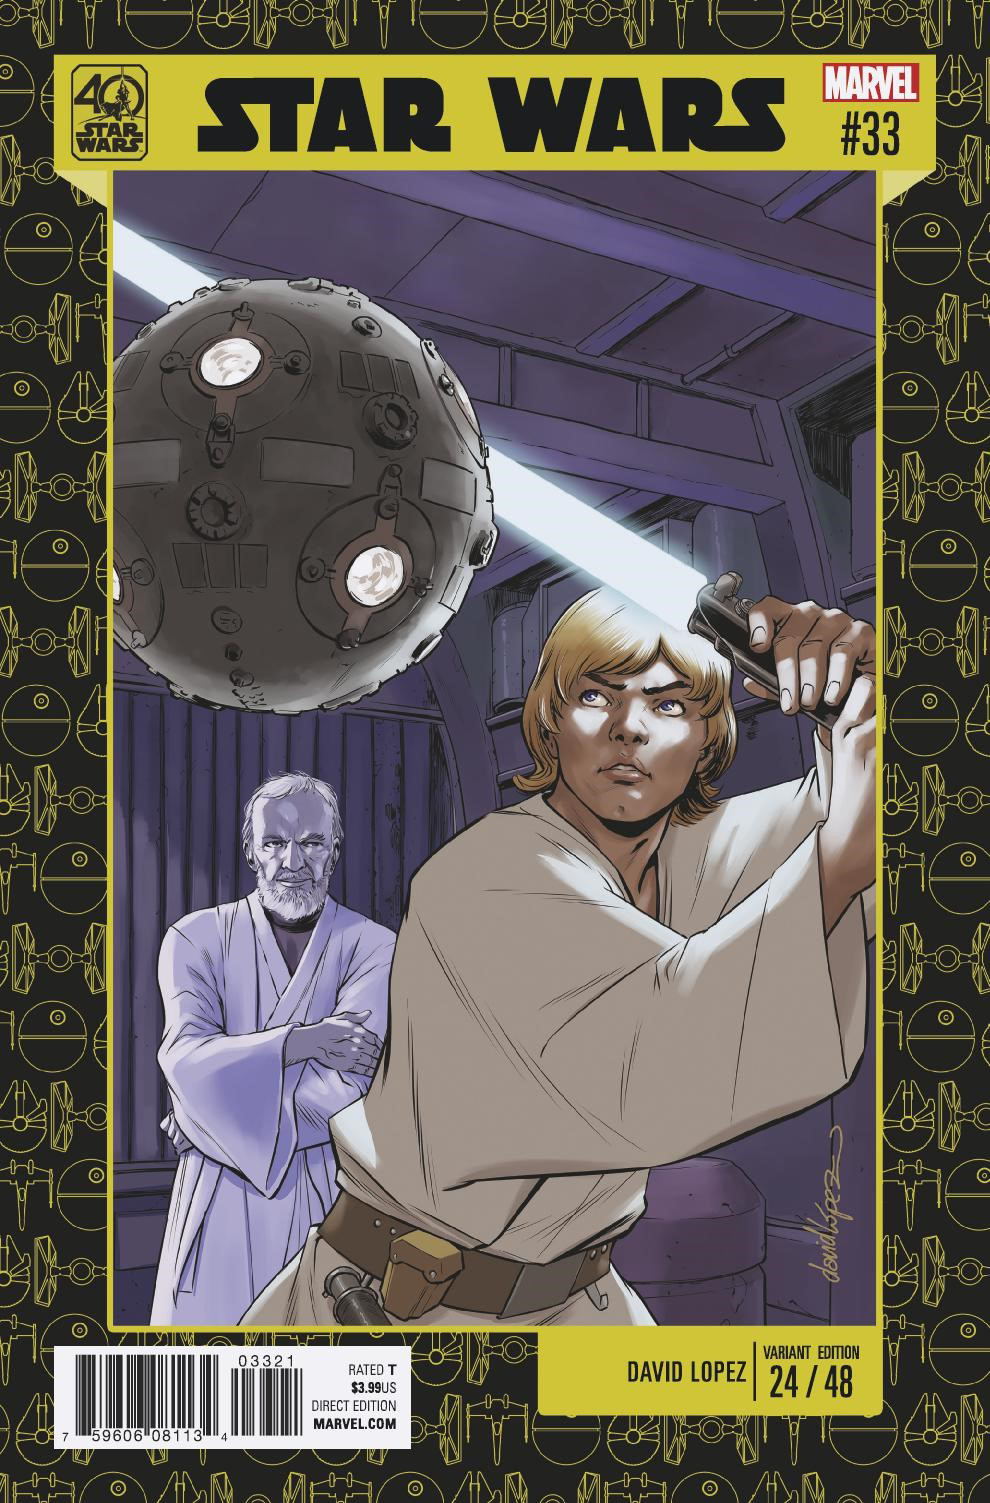 Star Wars #33 (David Lopez Star Wars 40th Anniversary Variant Cover) (05.07.2017)